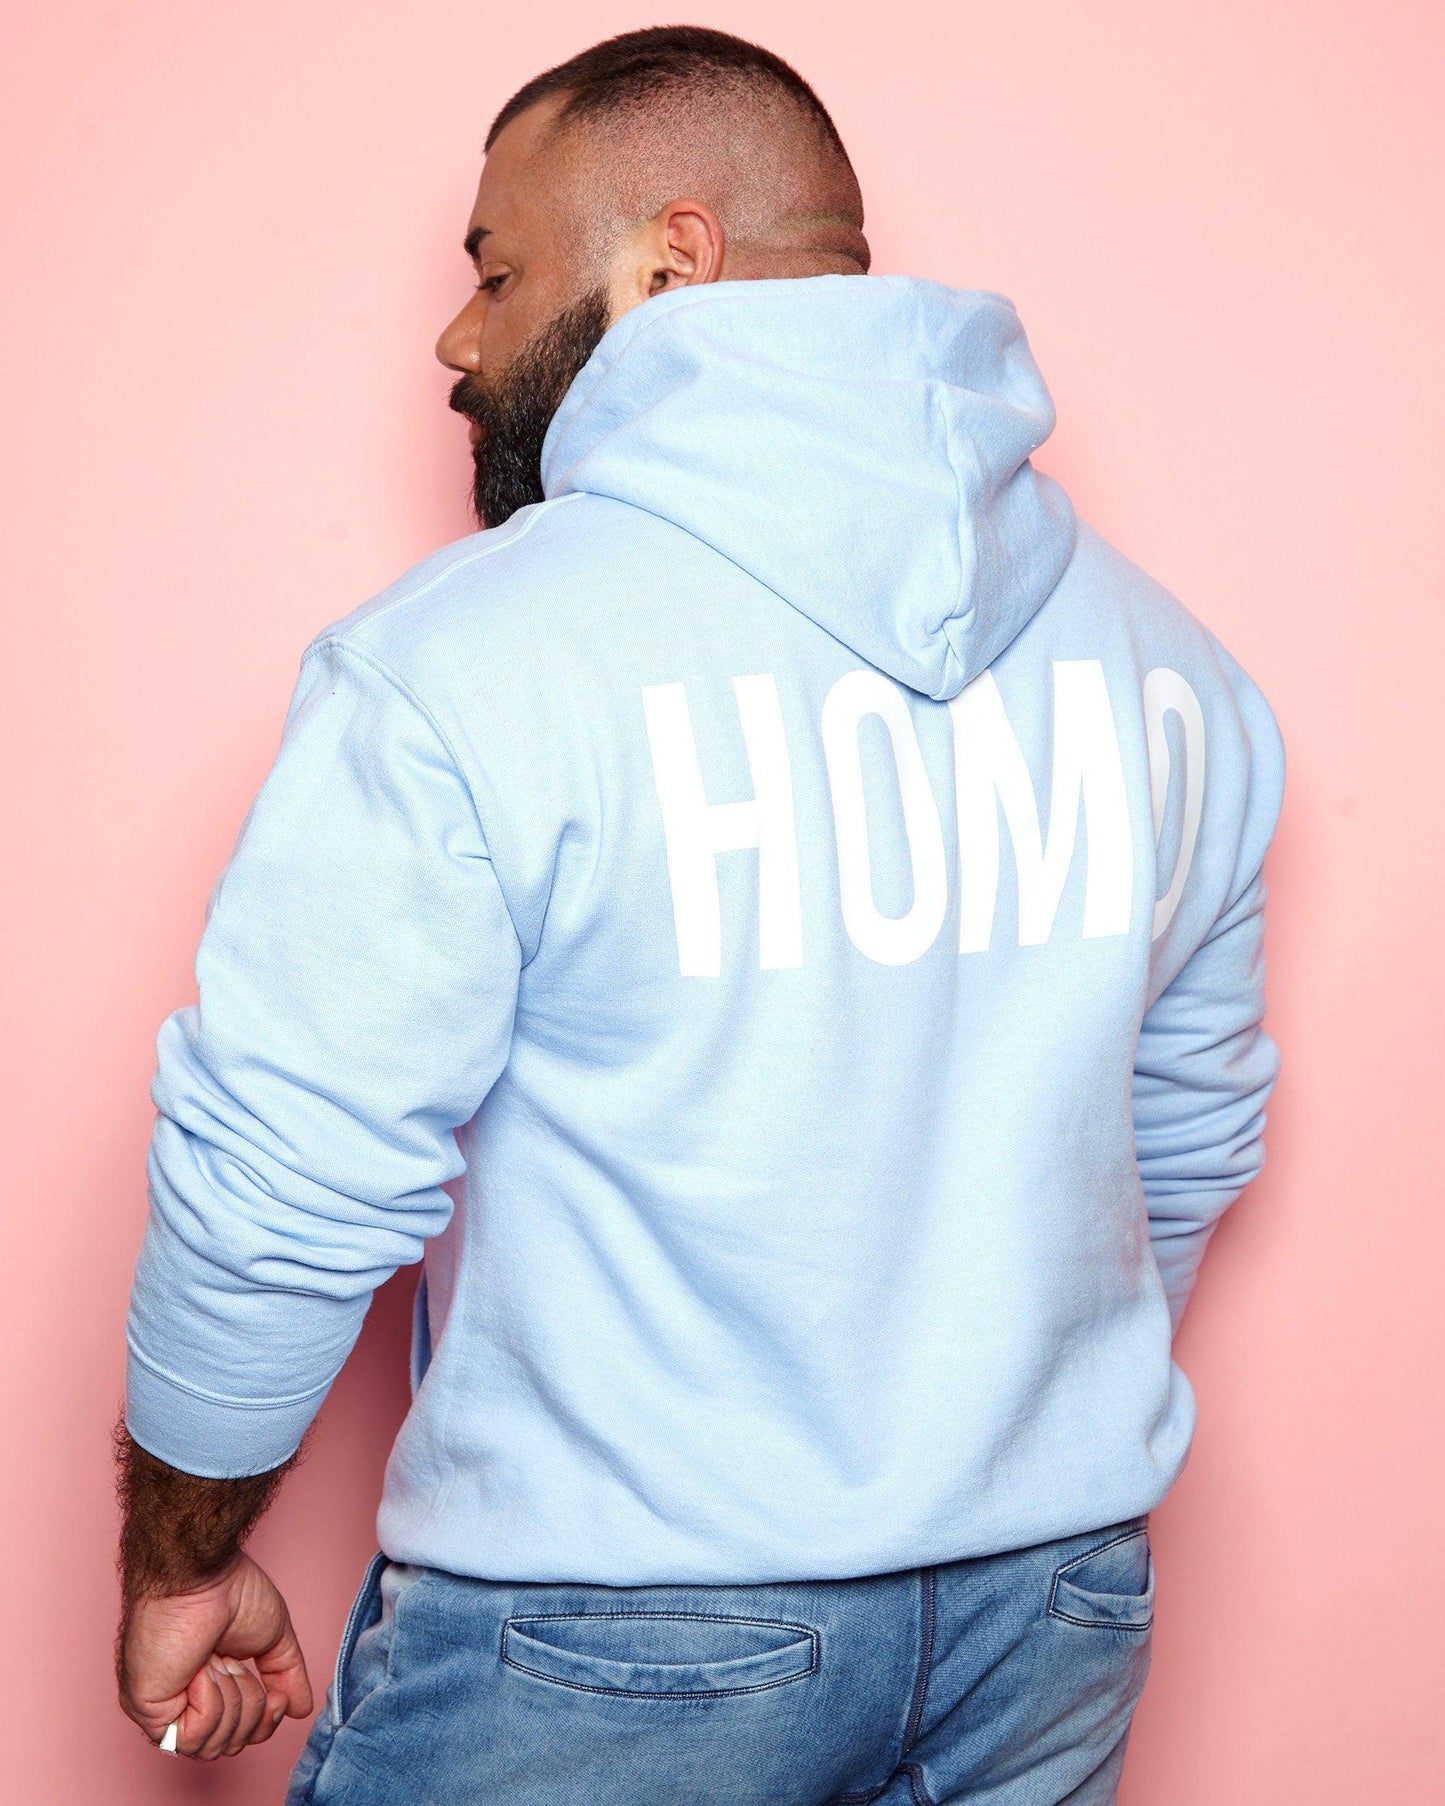 HOMO hoodie - White on Light Blue.